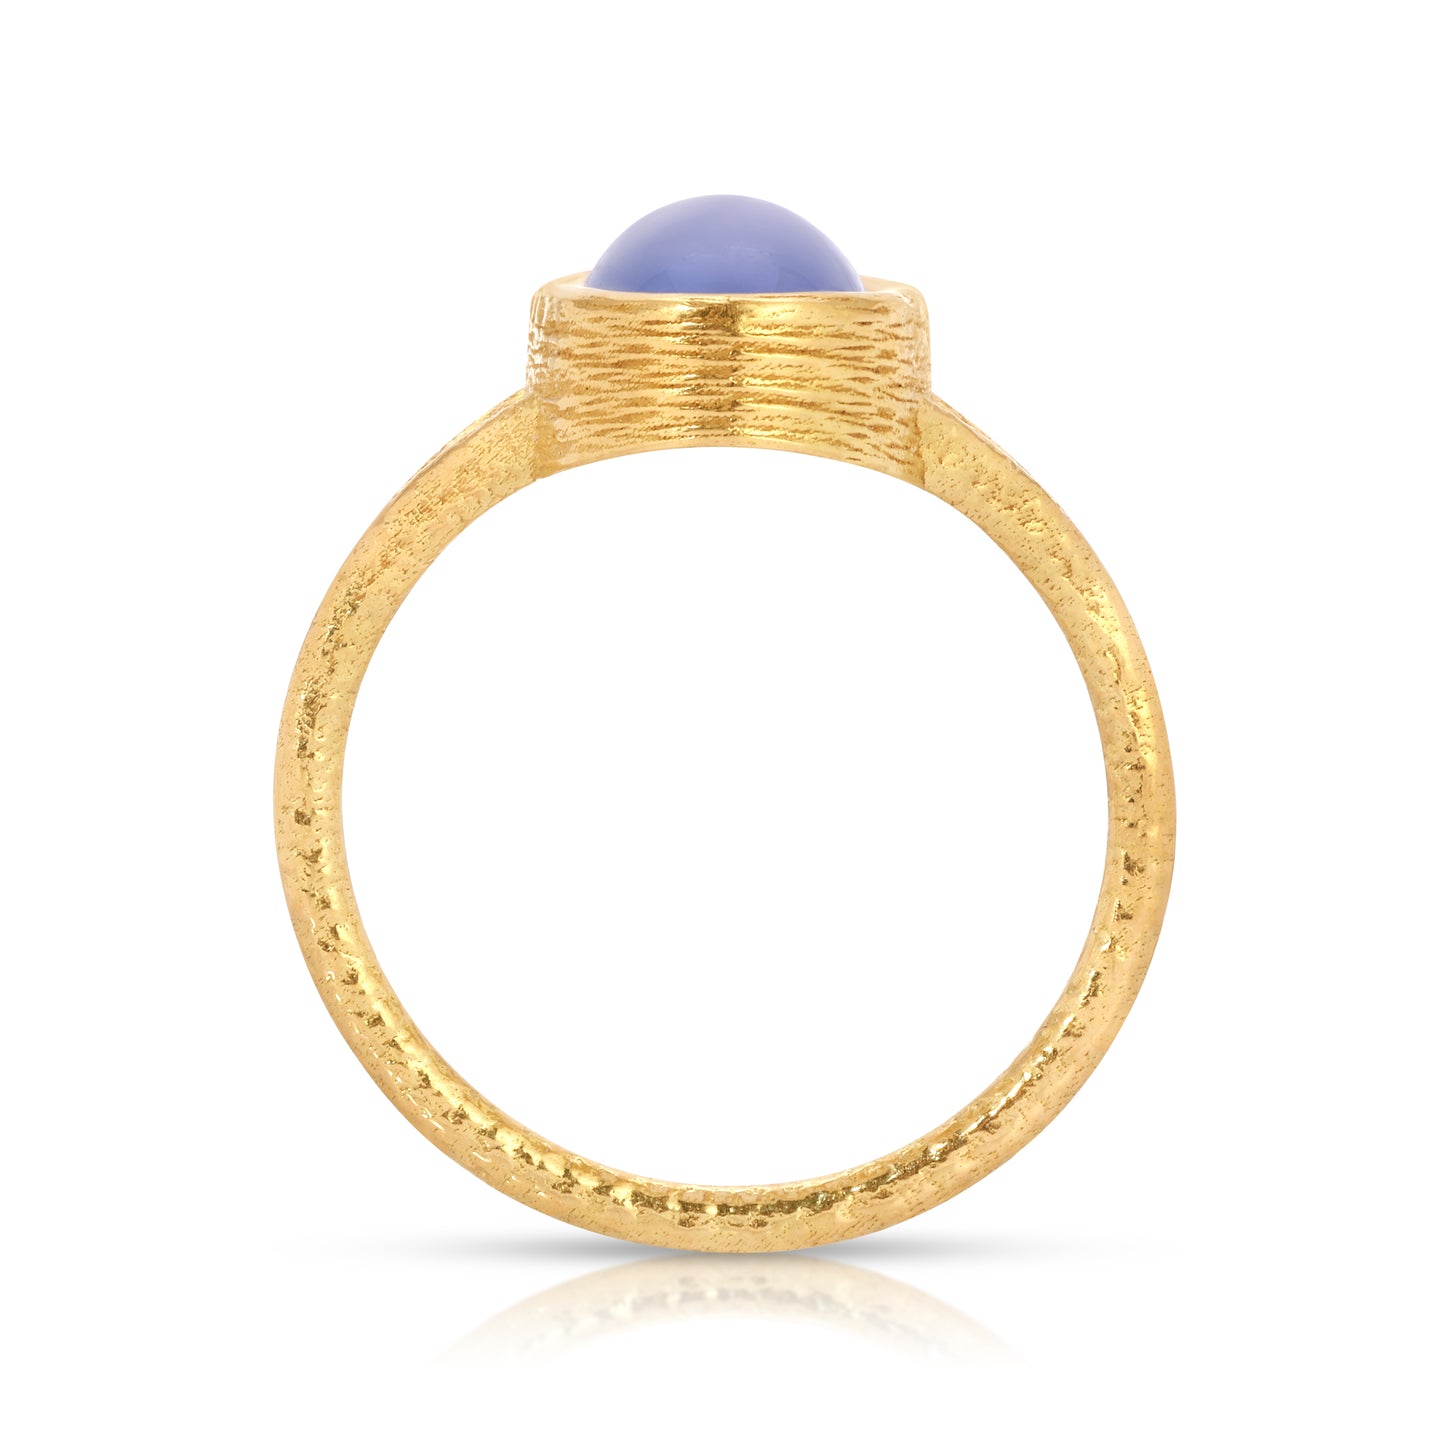 Blue Chalcedony Diamond Venetian Ring, 18k gold